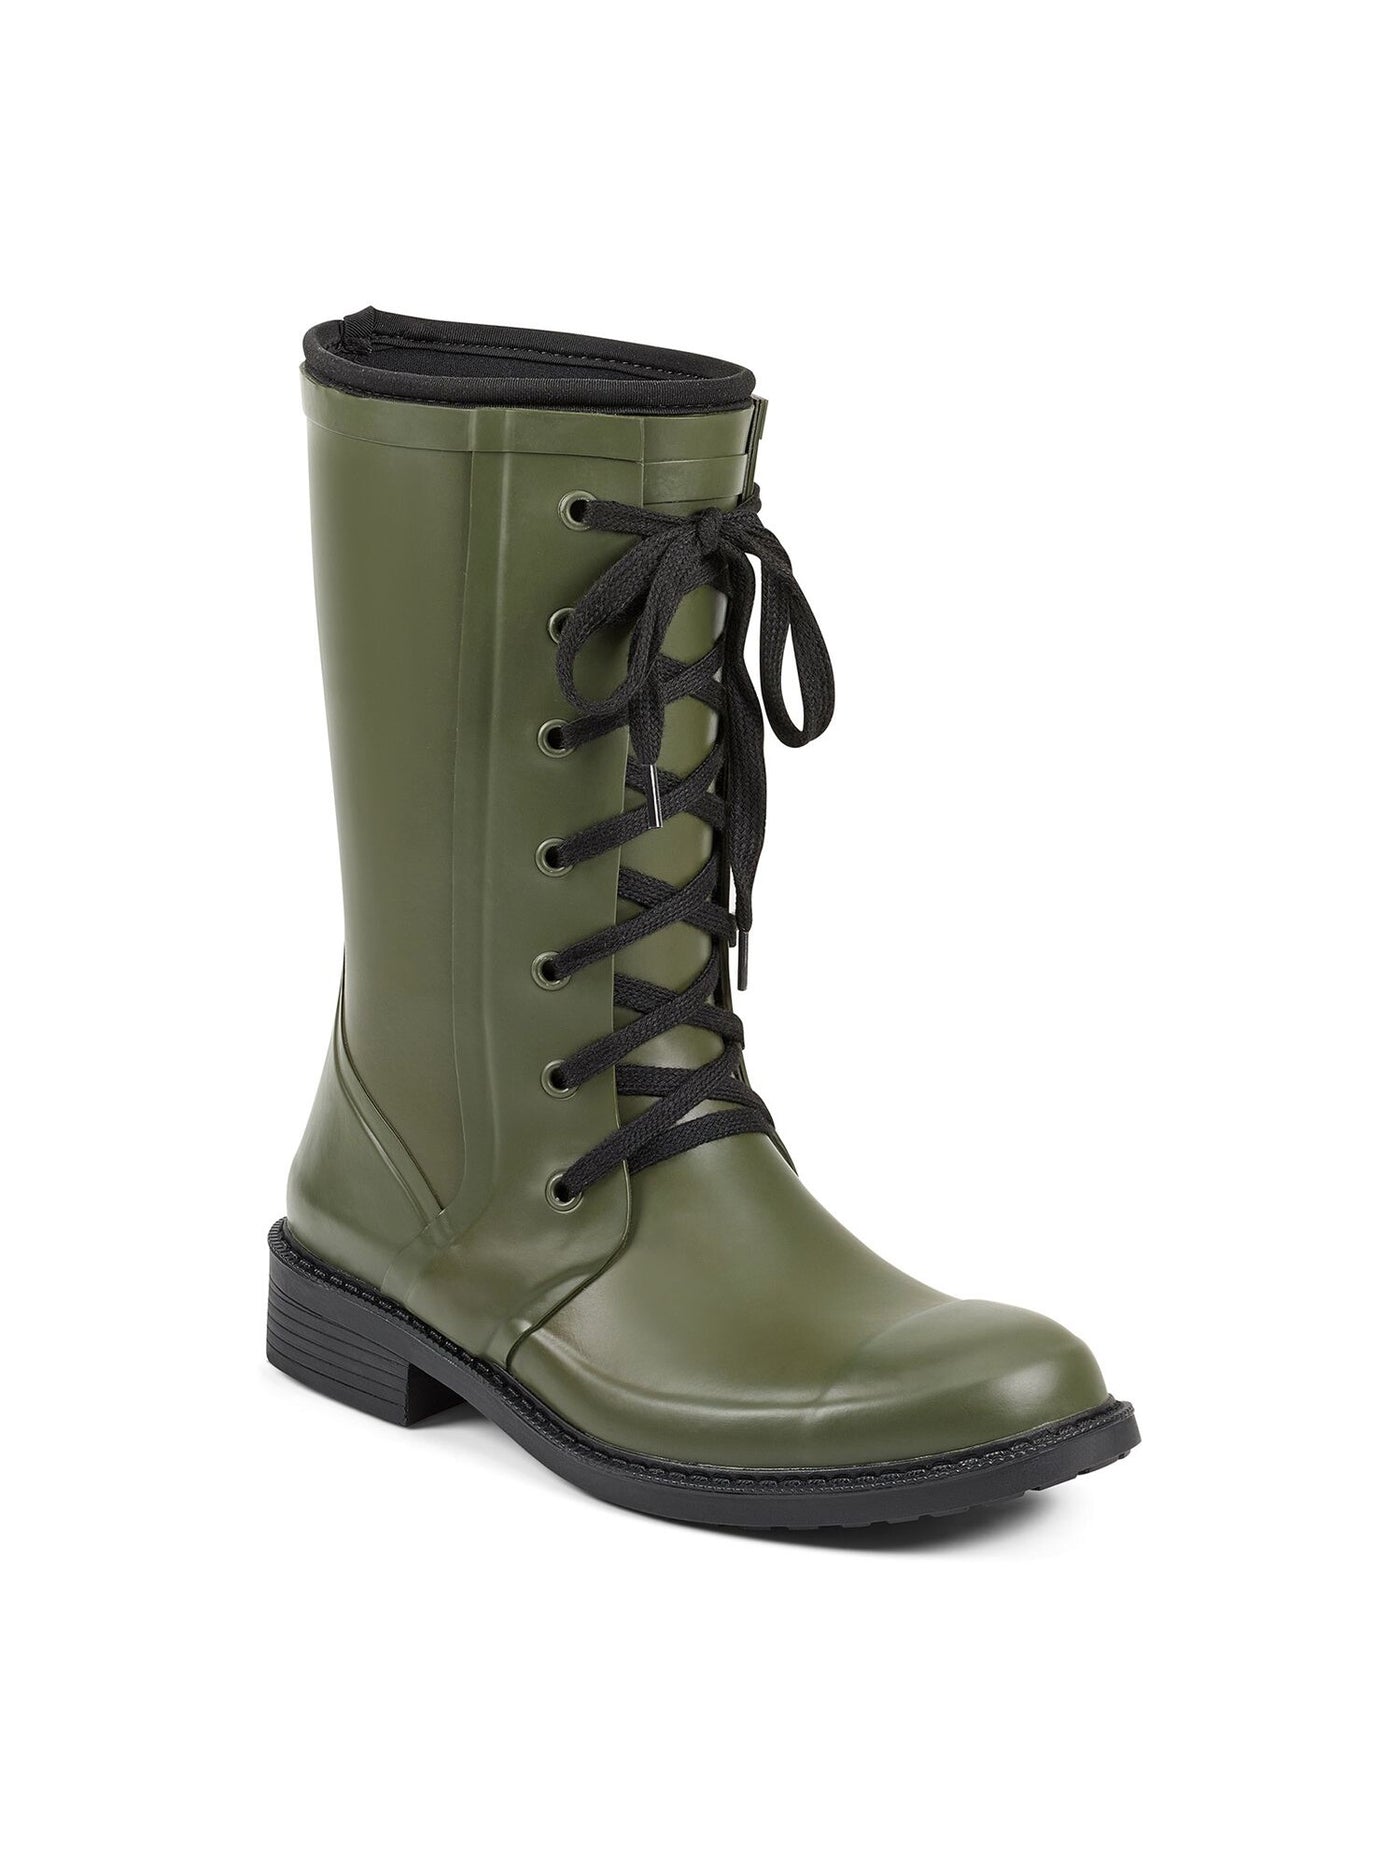 AEROSOLES Womens Green Waterproof Lined Vernon Round Toe Block Heel Lace-Up Rain Boots 8 M